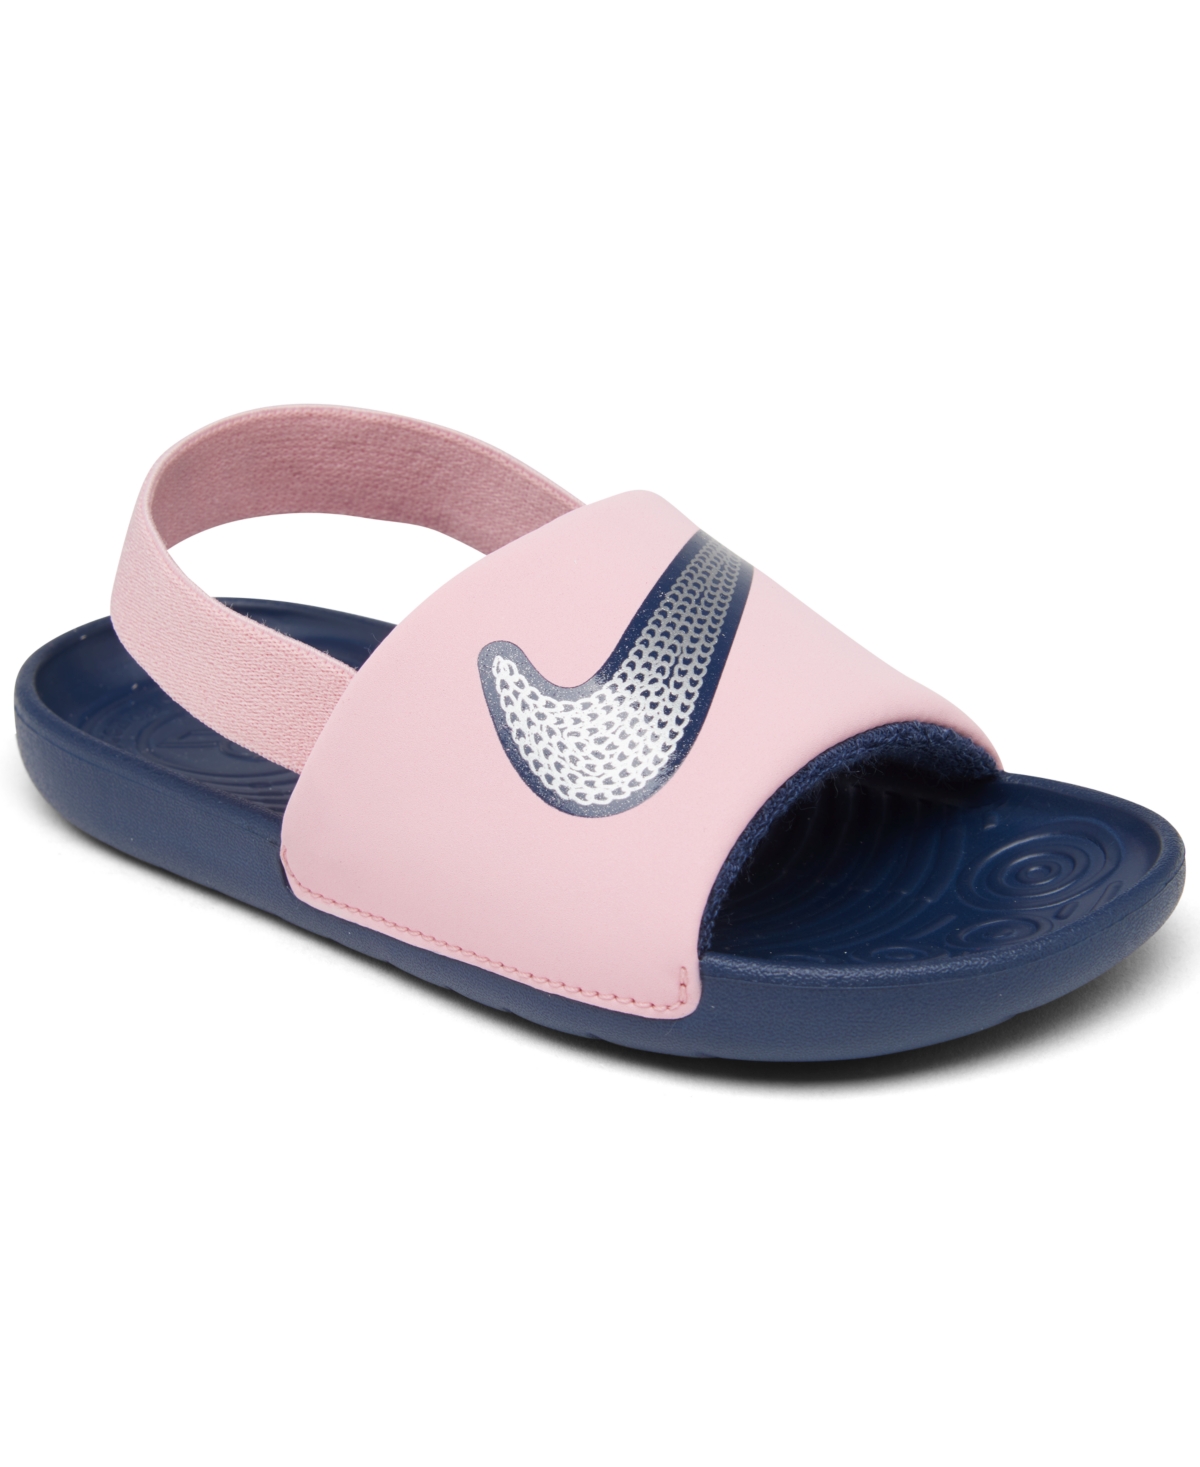 Nike Toddler Girls Kawa Se Slide Sandals From Finish Line In Pink Glaze/midnight Navy